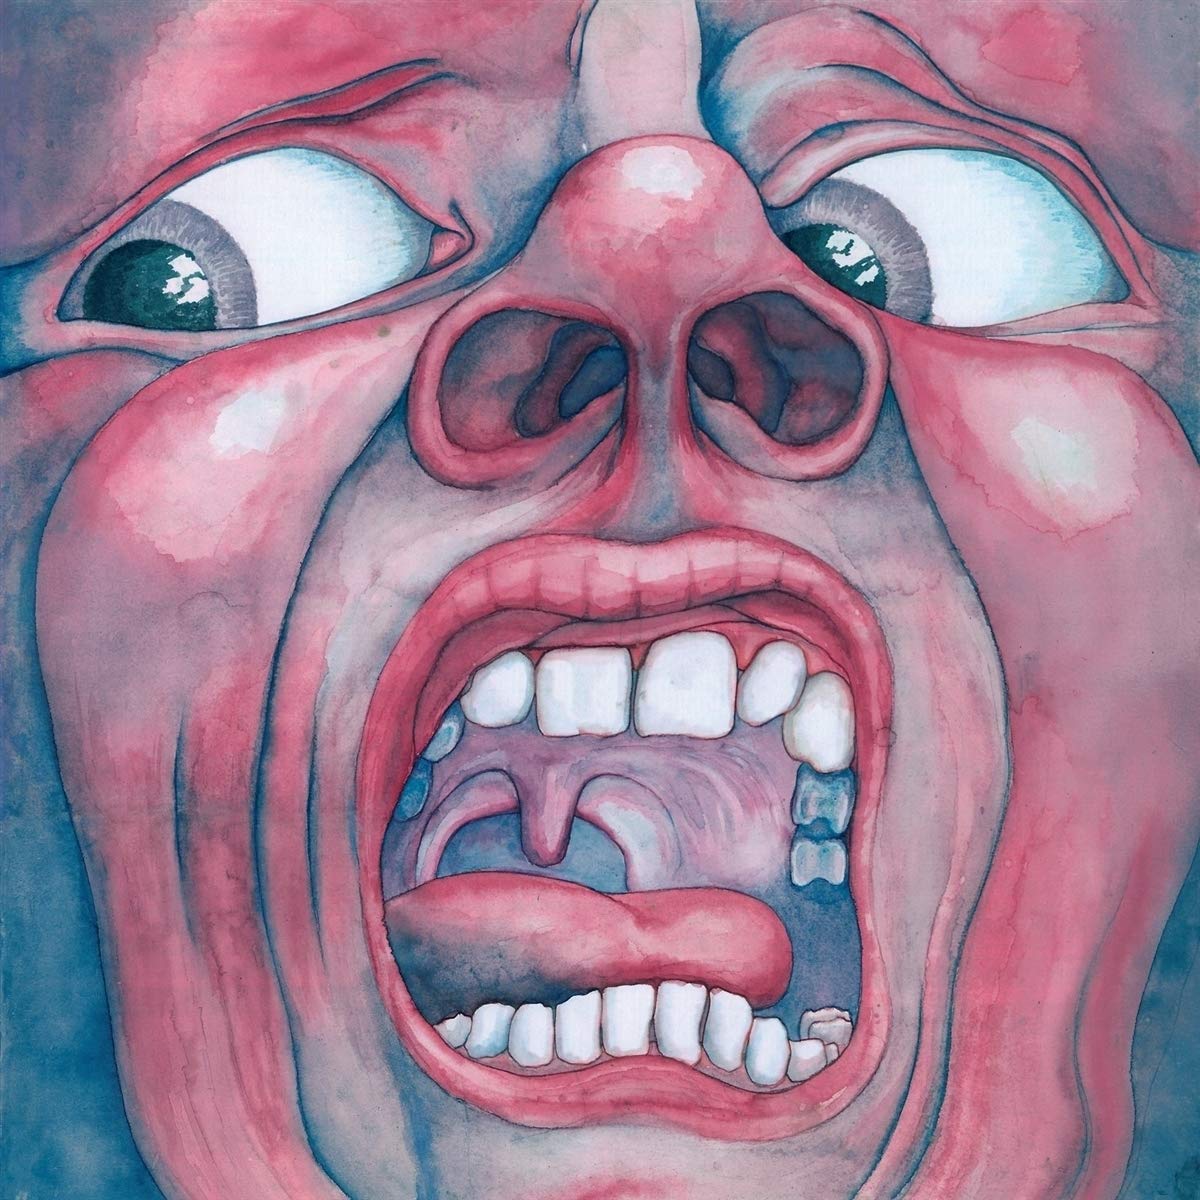 King Crimson — 21st Century Schizoid Man cover artwork